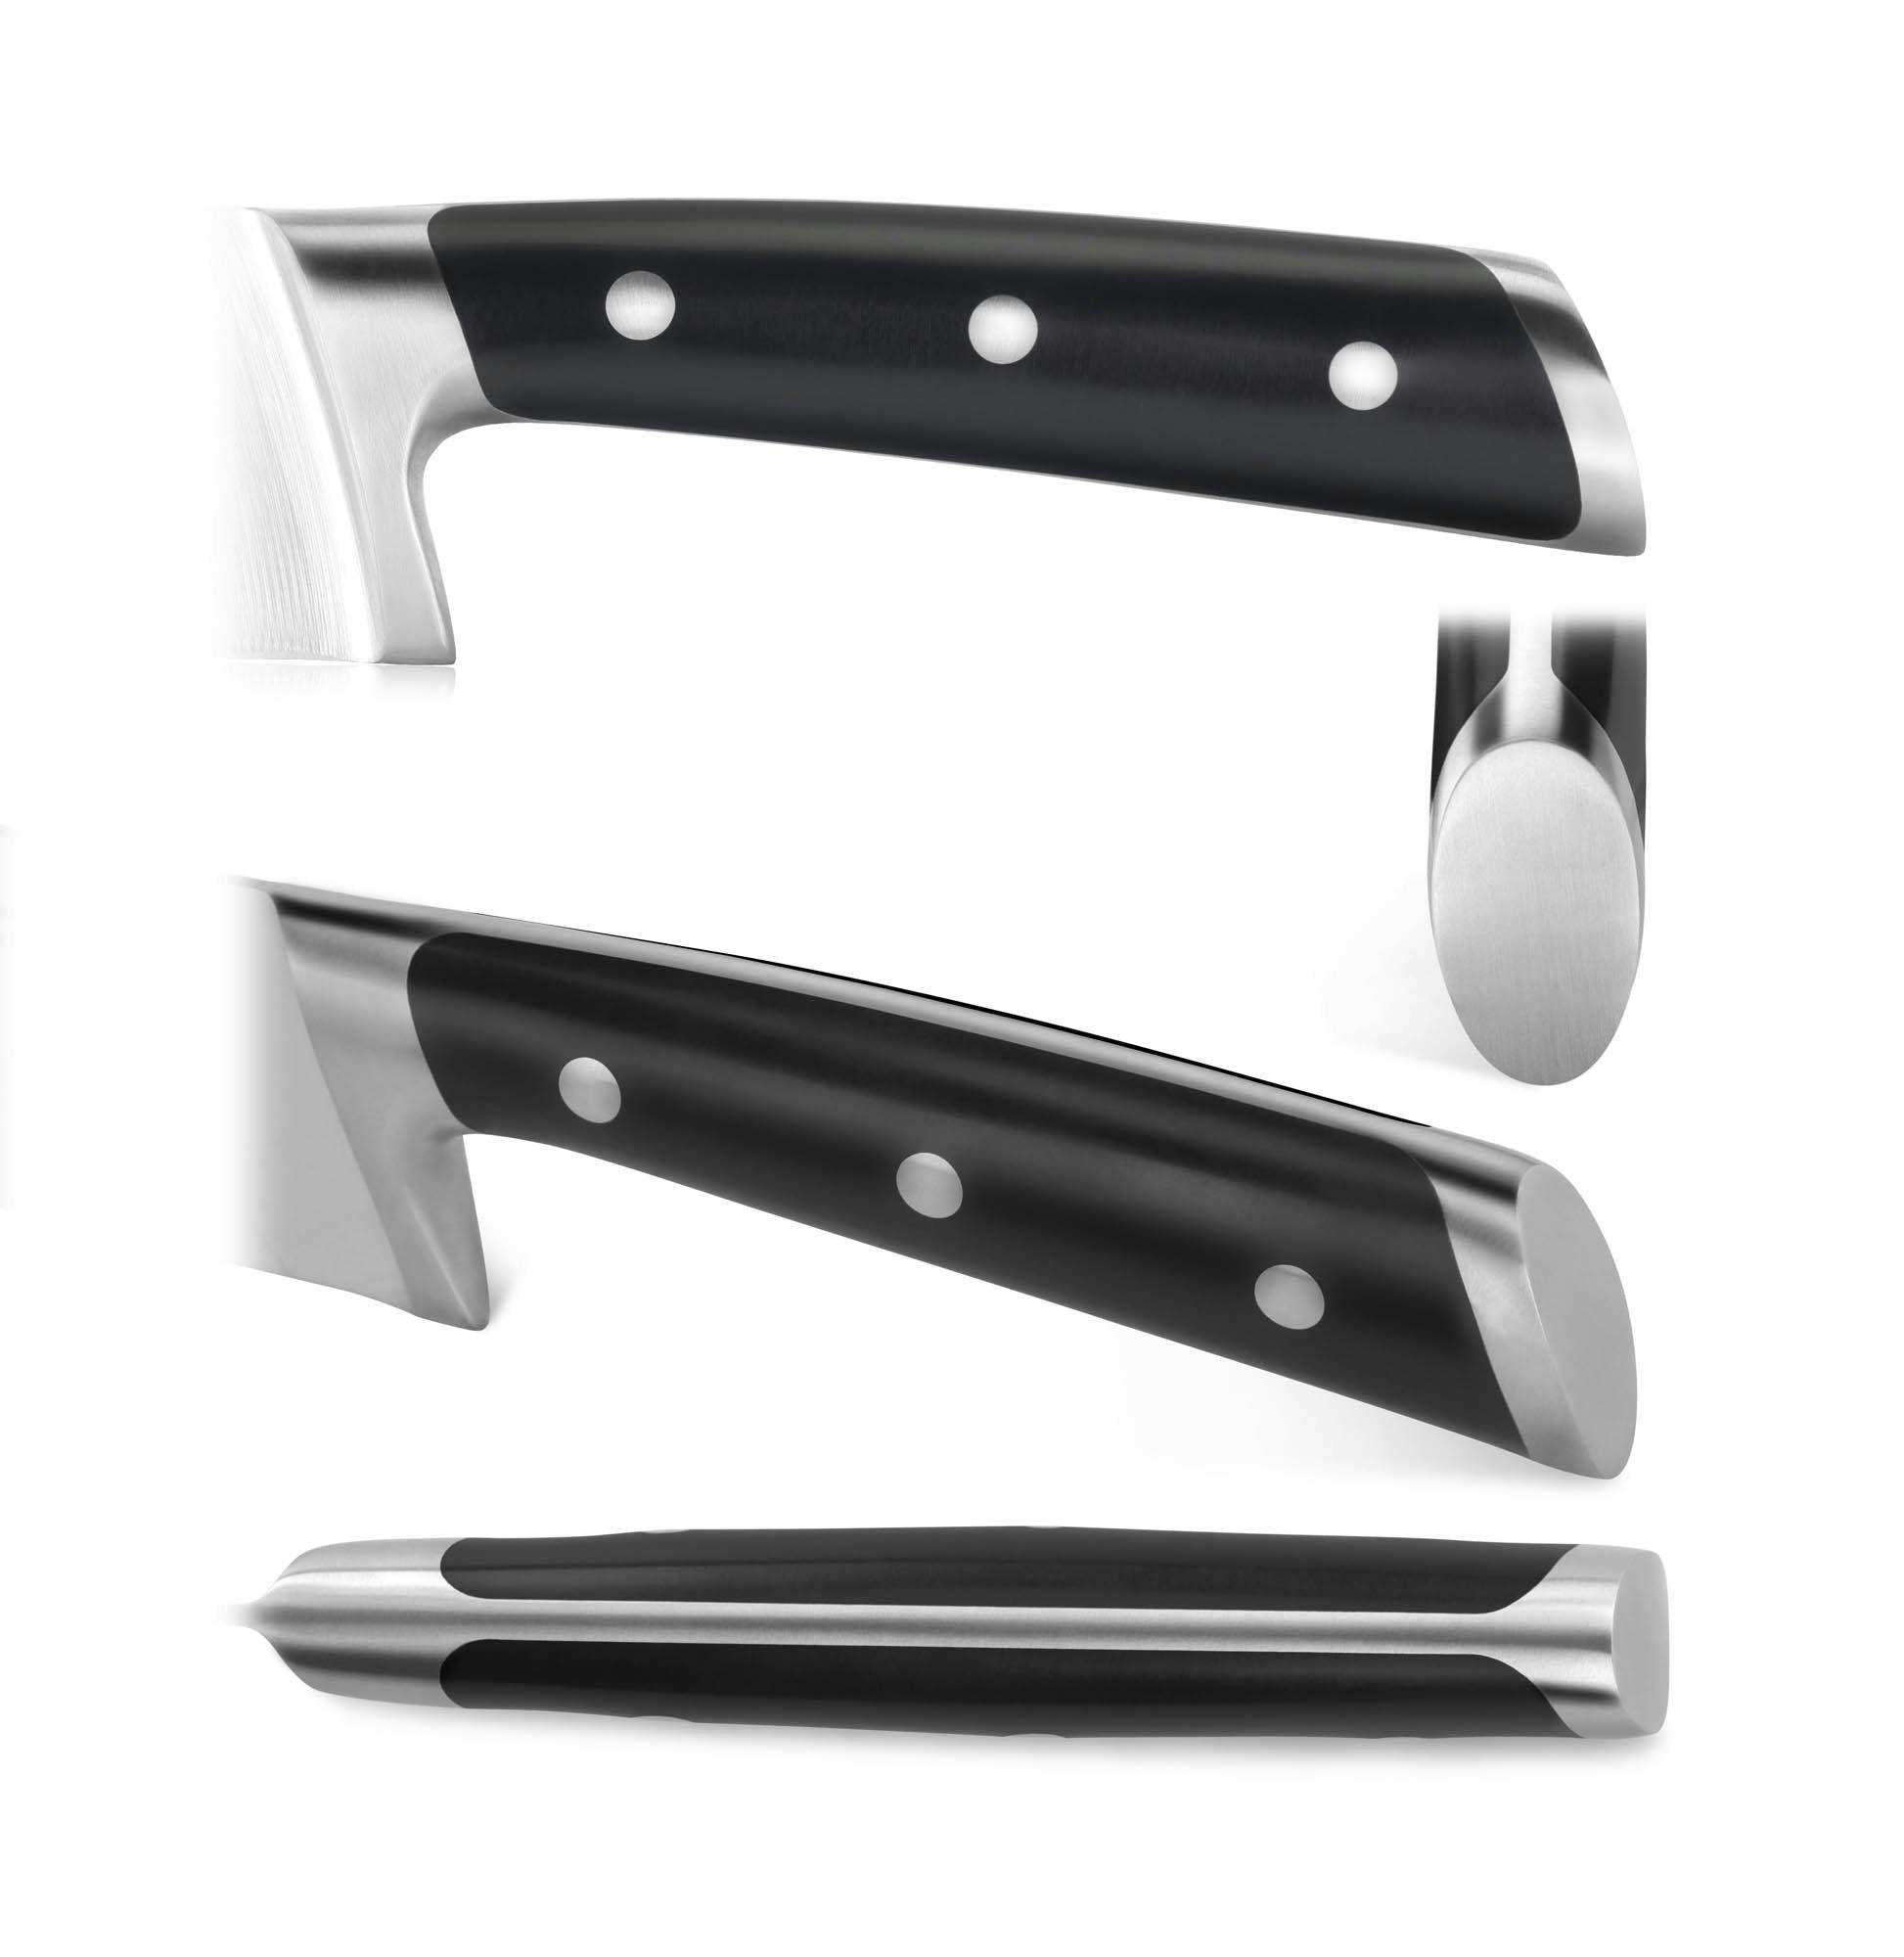 Cangshan TS Series 14-Piece DENALI Knife Block Set